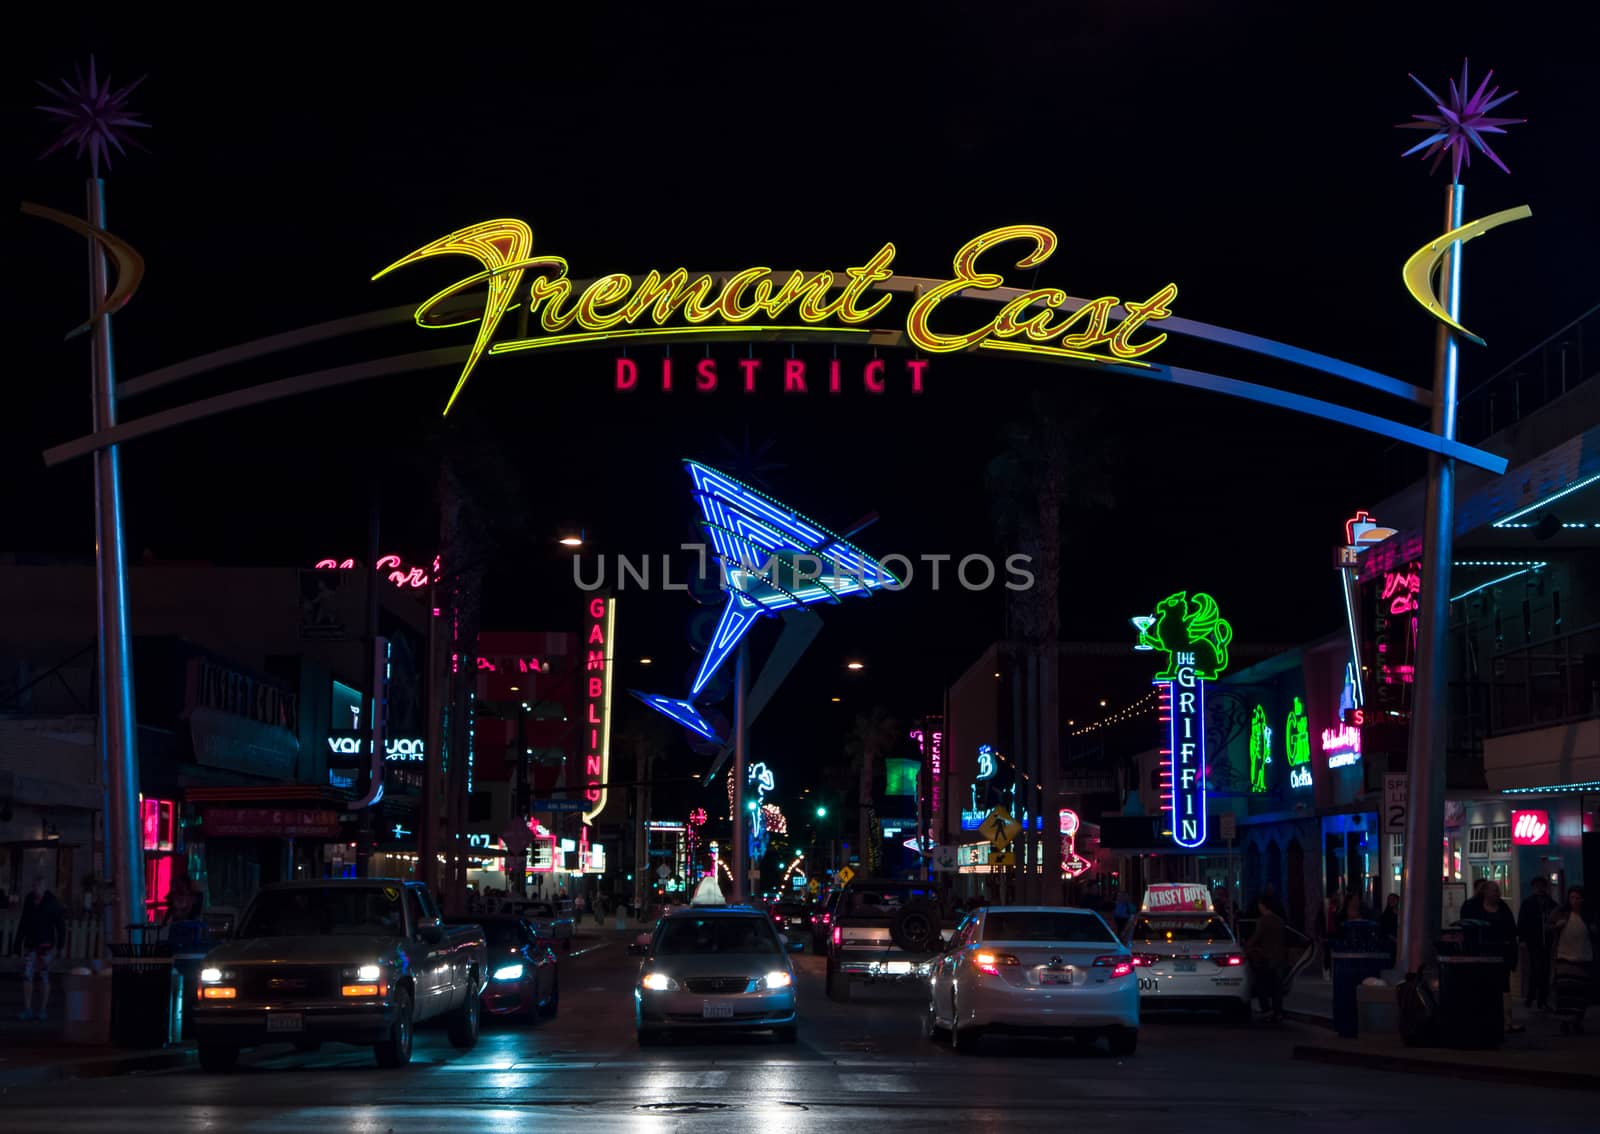 LAS VEGAS, NV/USA - FEBRUARY 14, 2016: Landmark lights of Fremont East District in downtown Las Vegas.